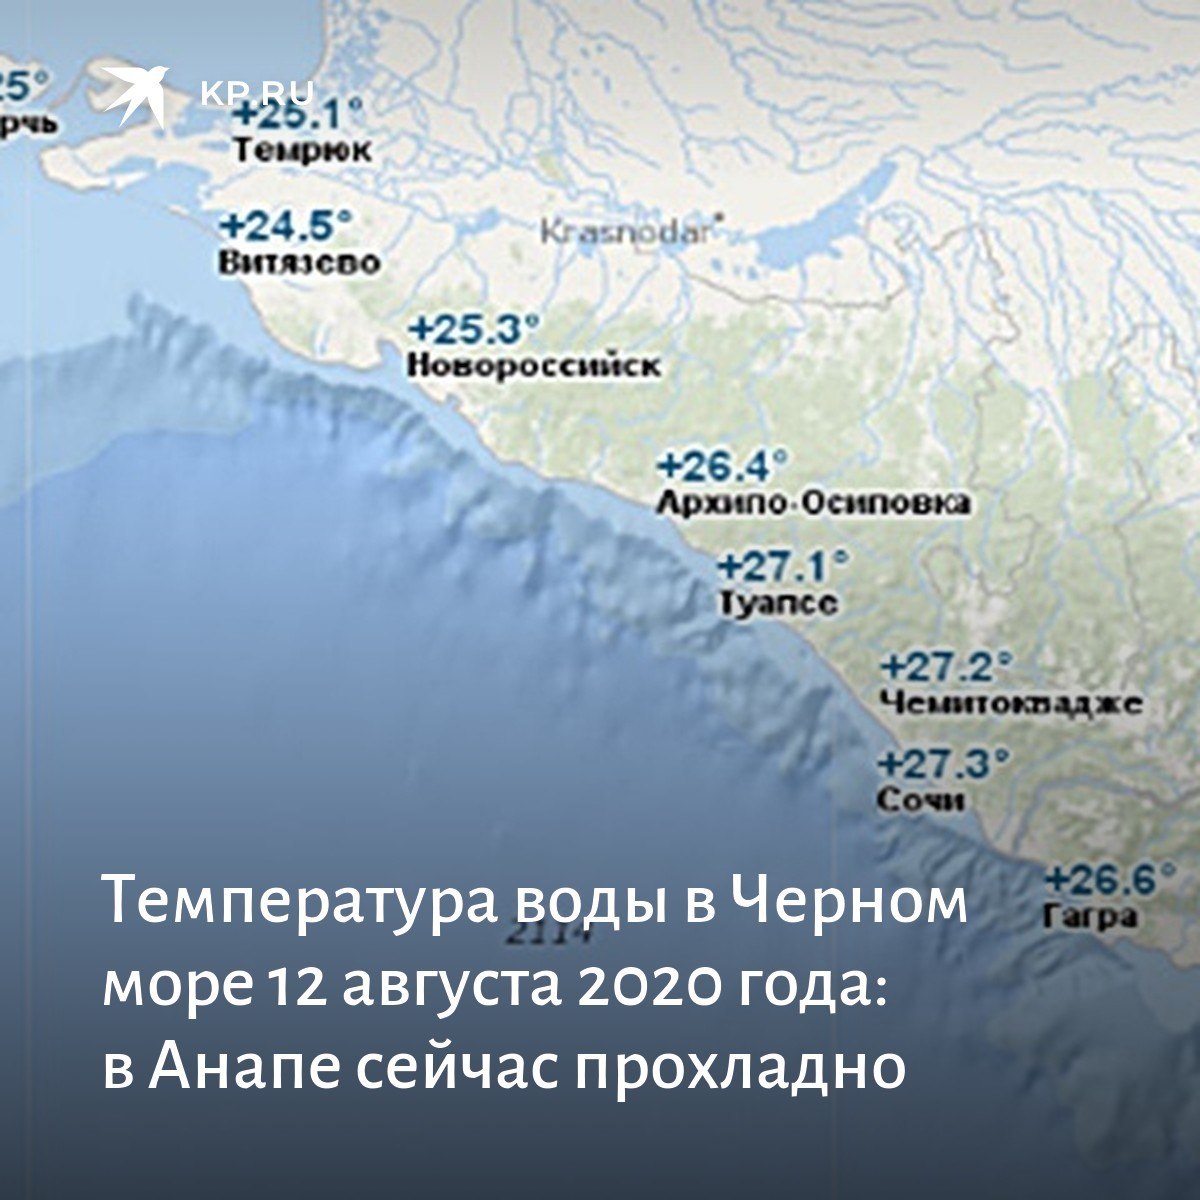 Погода в сочи на карте. Черное море Сочи. Температурная карта Черноморского побережья. Туапсе побережье черного моря. Глубина моря в районе Сочи.